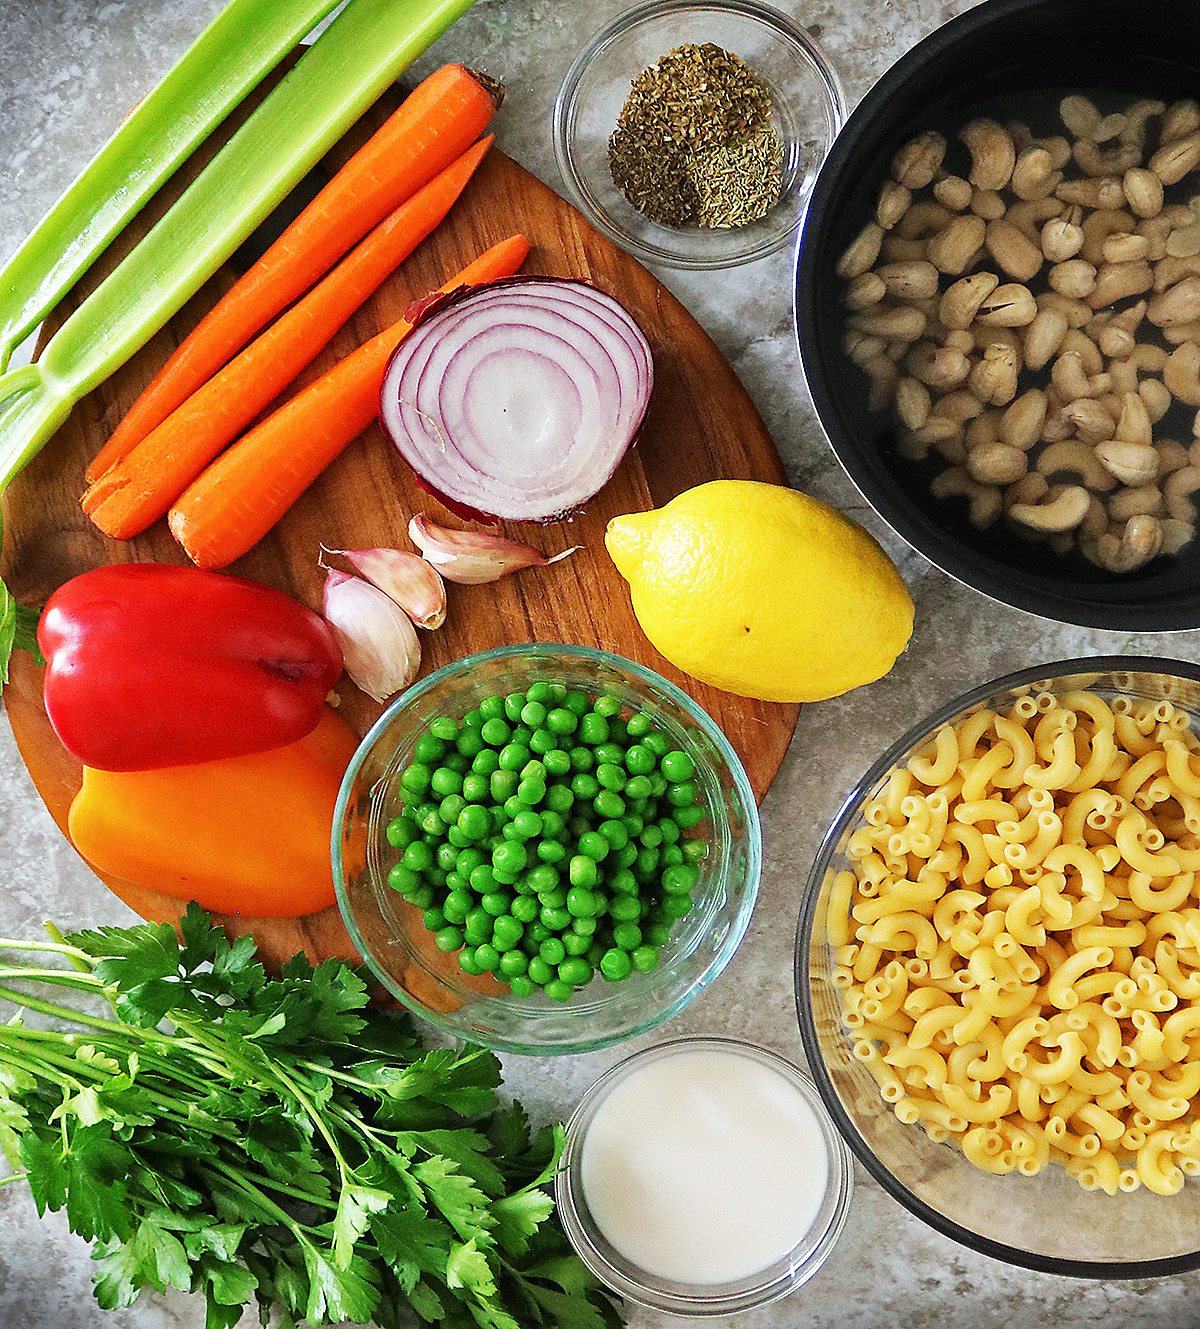 Ingredients-to-make-a-healthy-dairyfree-macaroni-salad